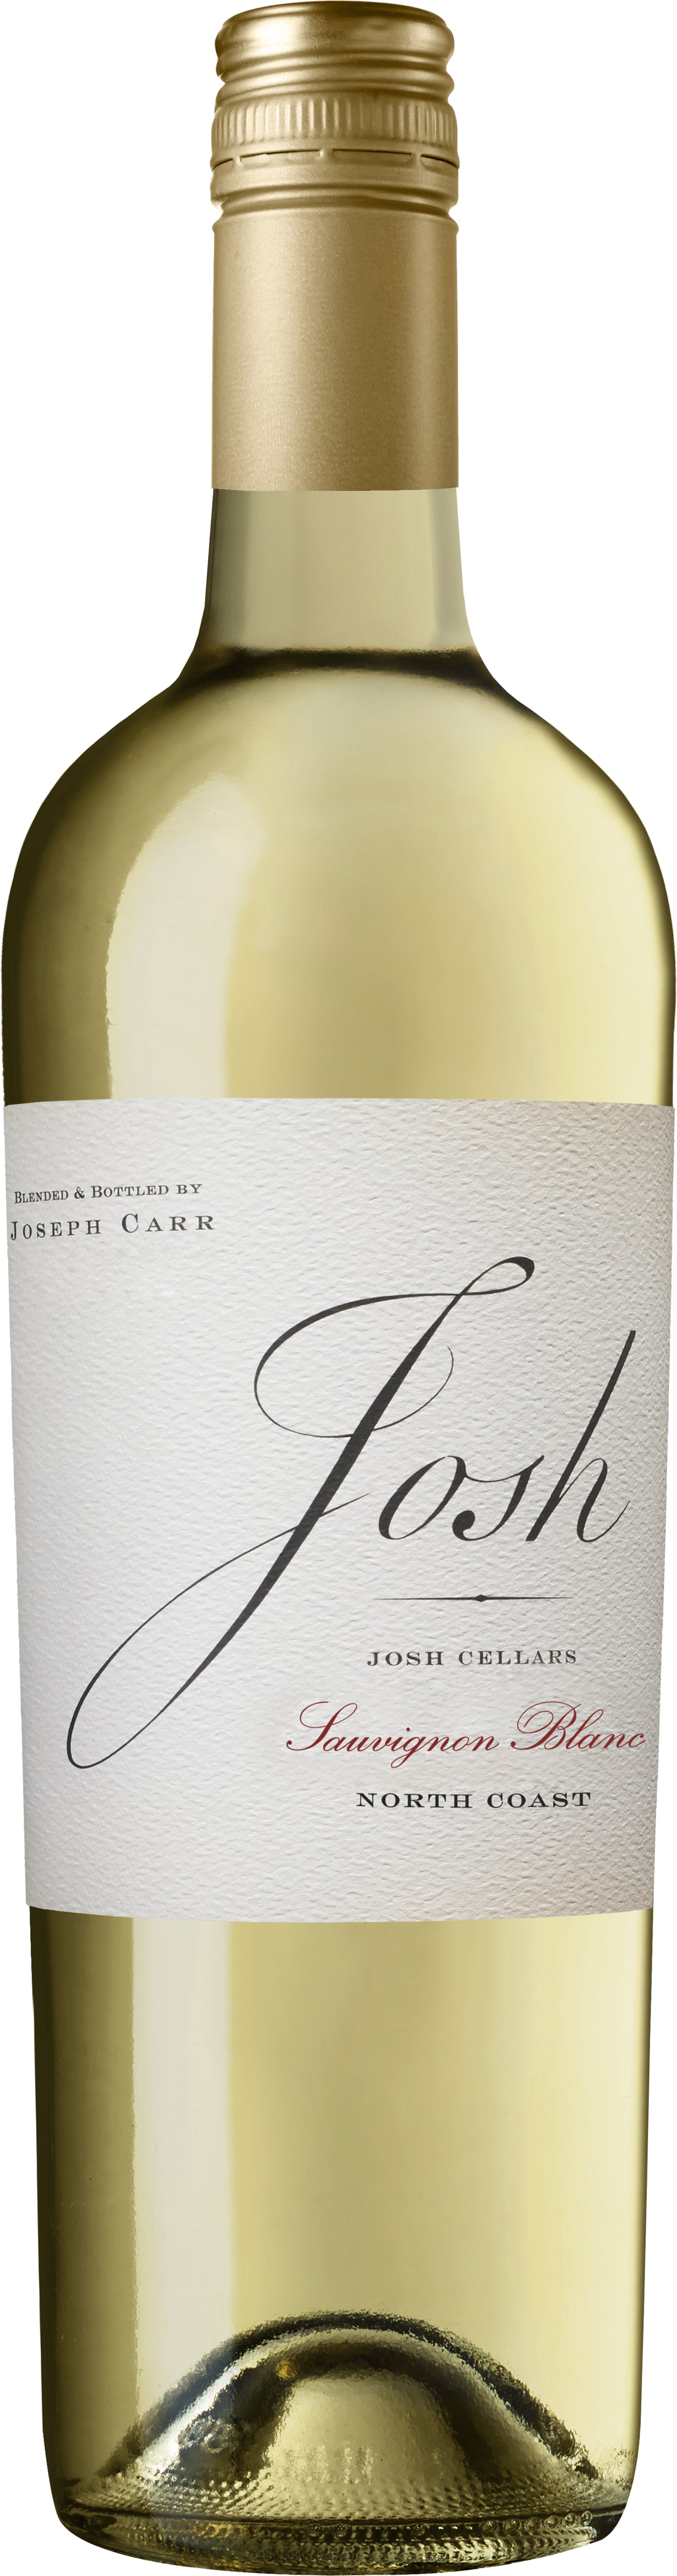 images/wine/WHITE WINE/Josh Cellars Sauvignon Blanc.jpg